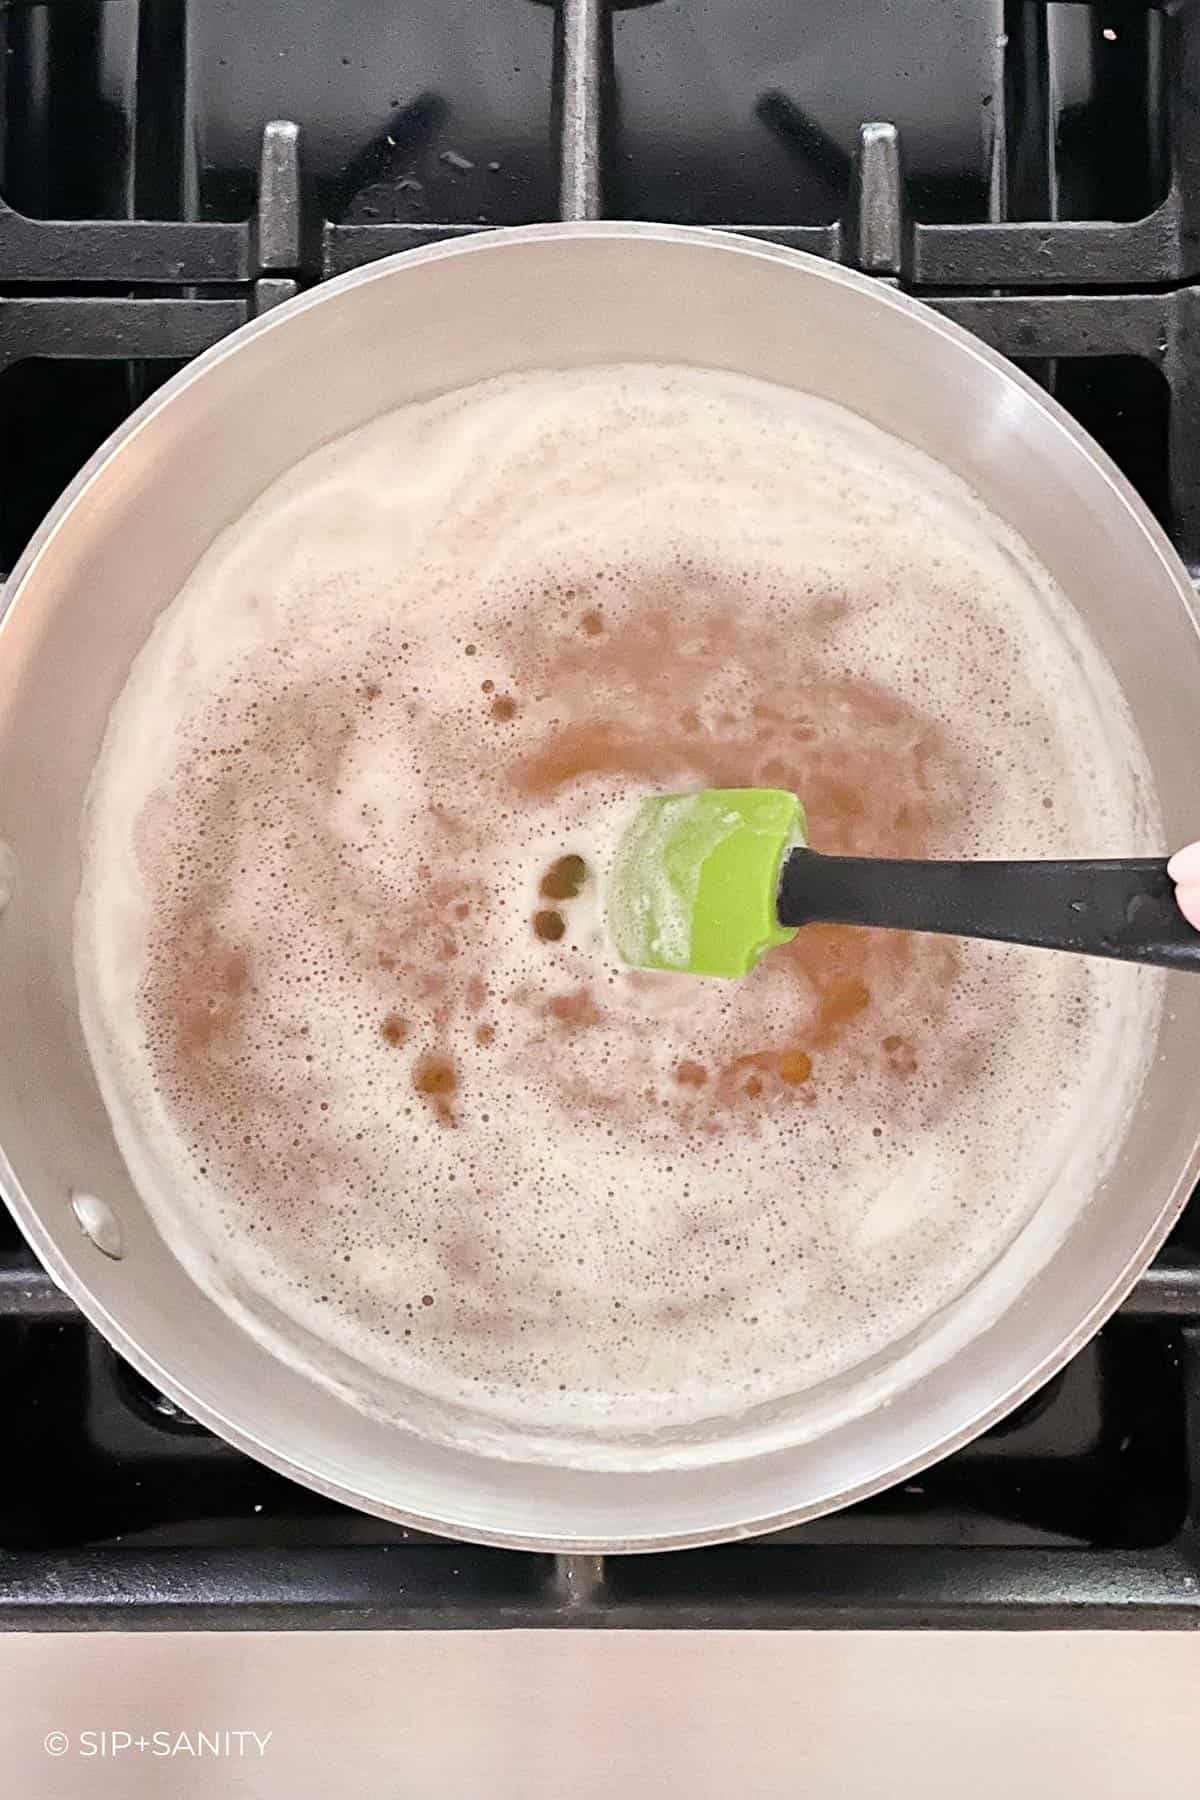 Beer simmering in a saucepan on a cooktop.